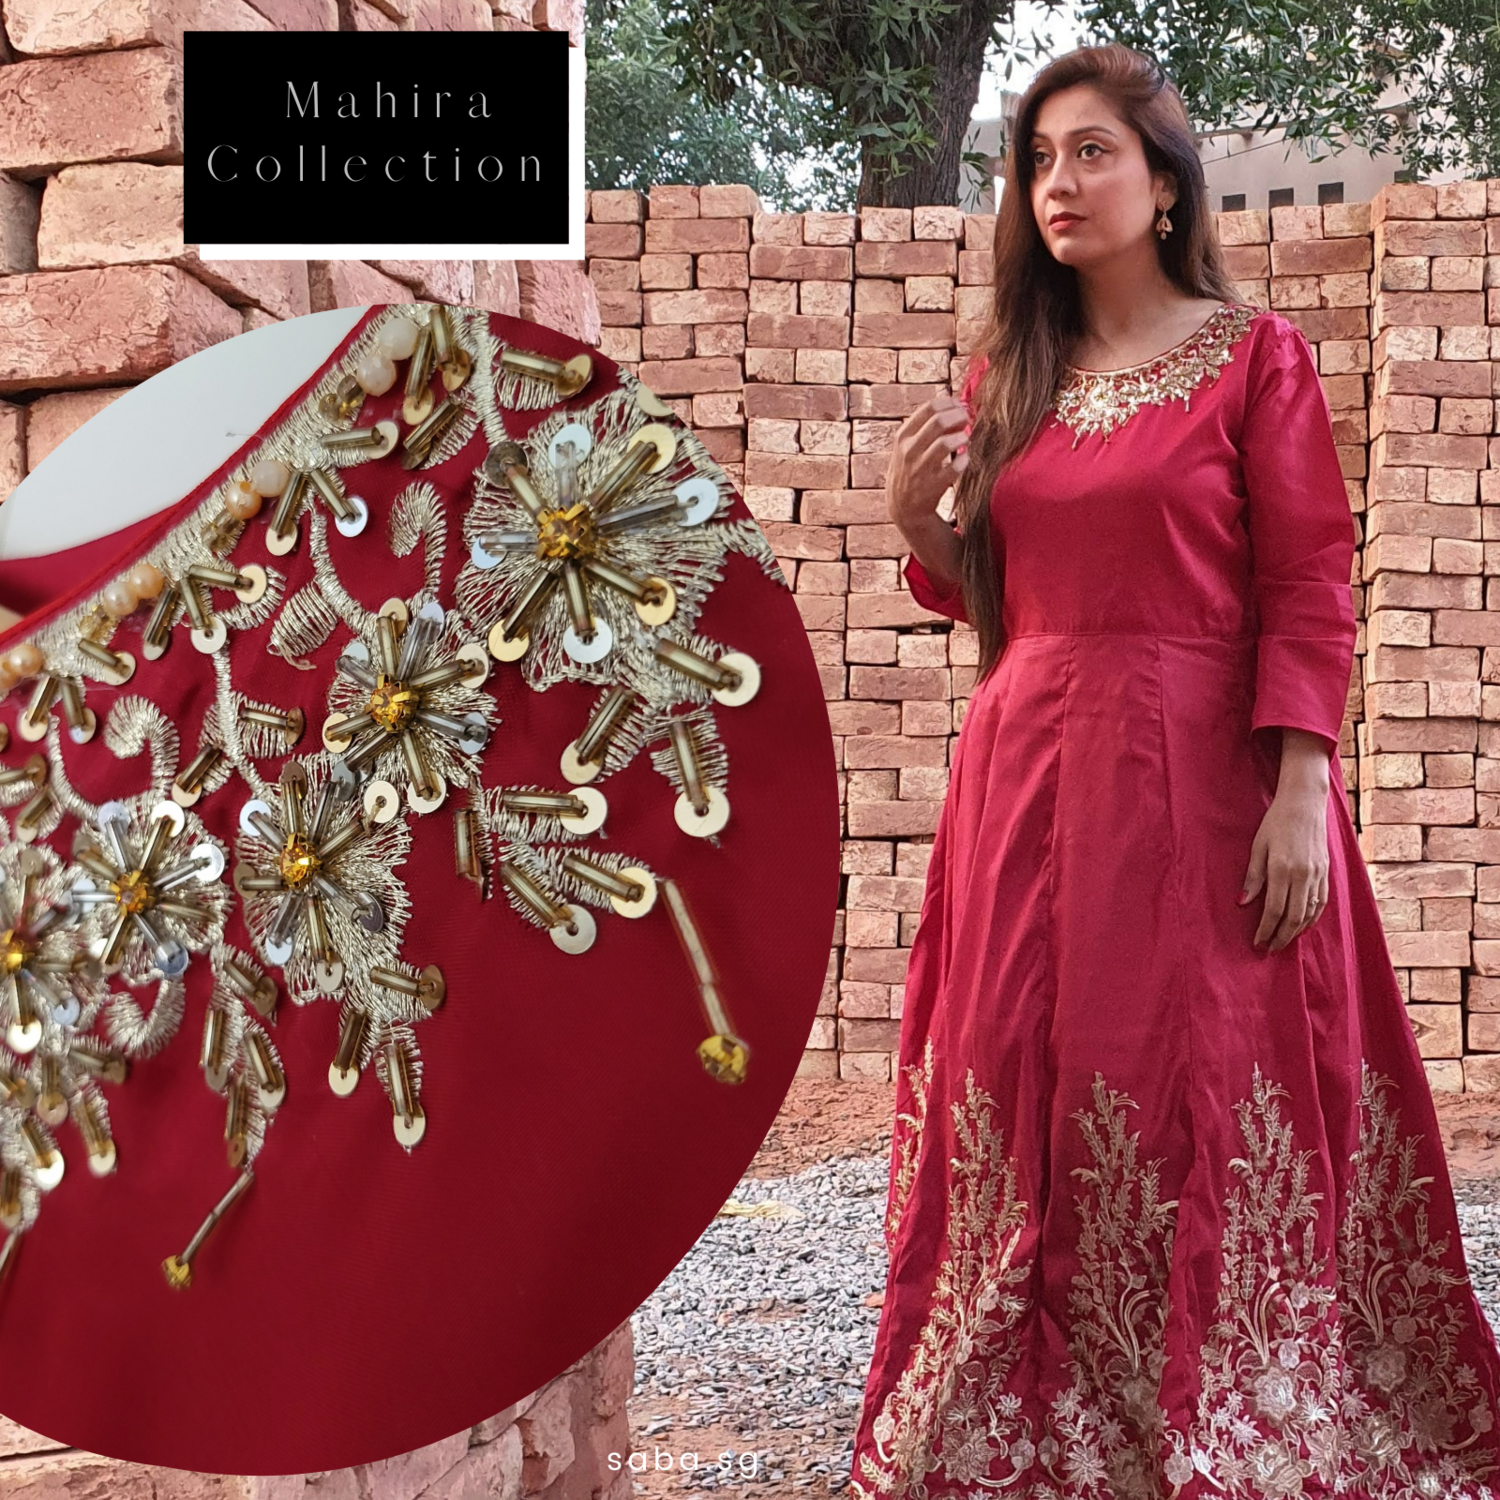 The Mahira Dress